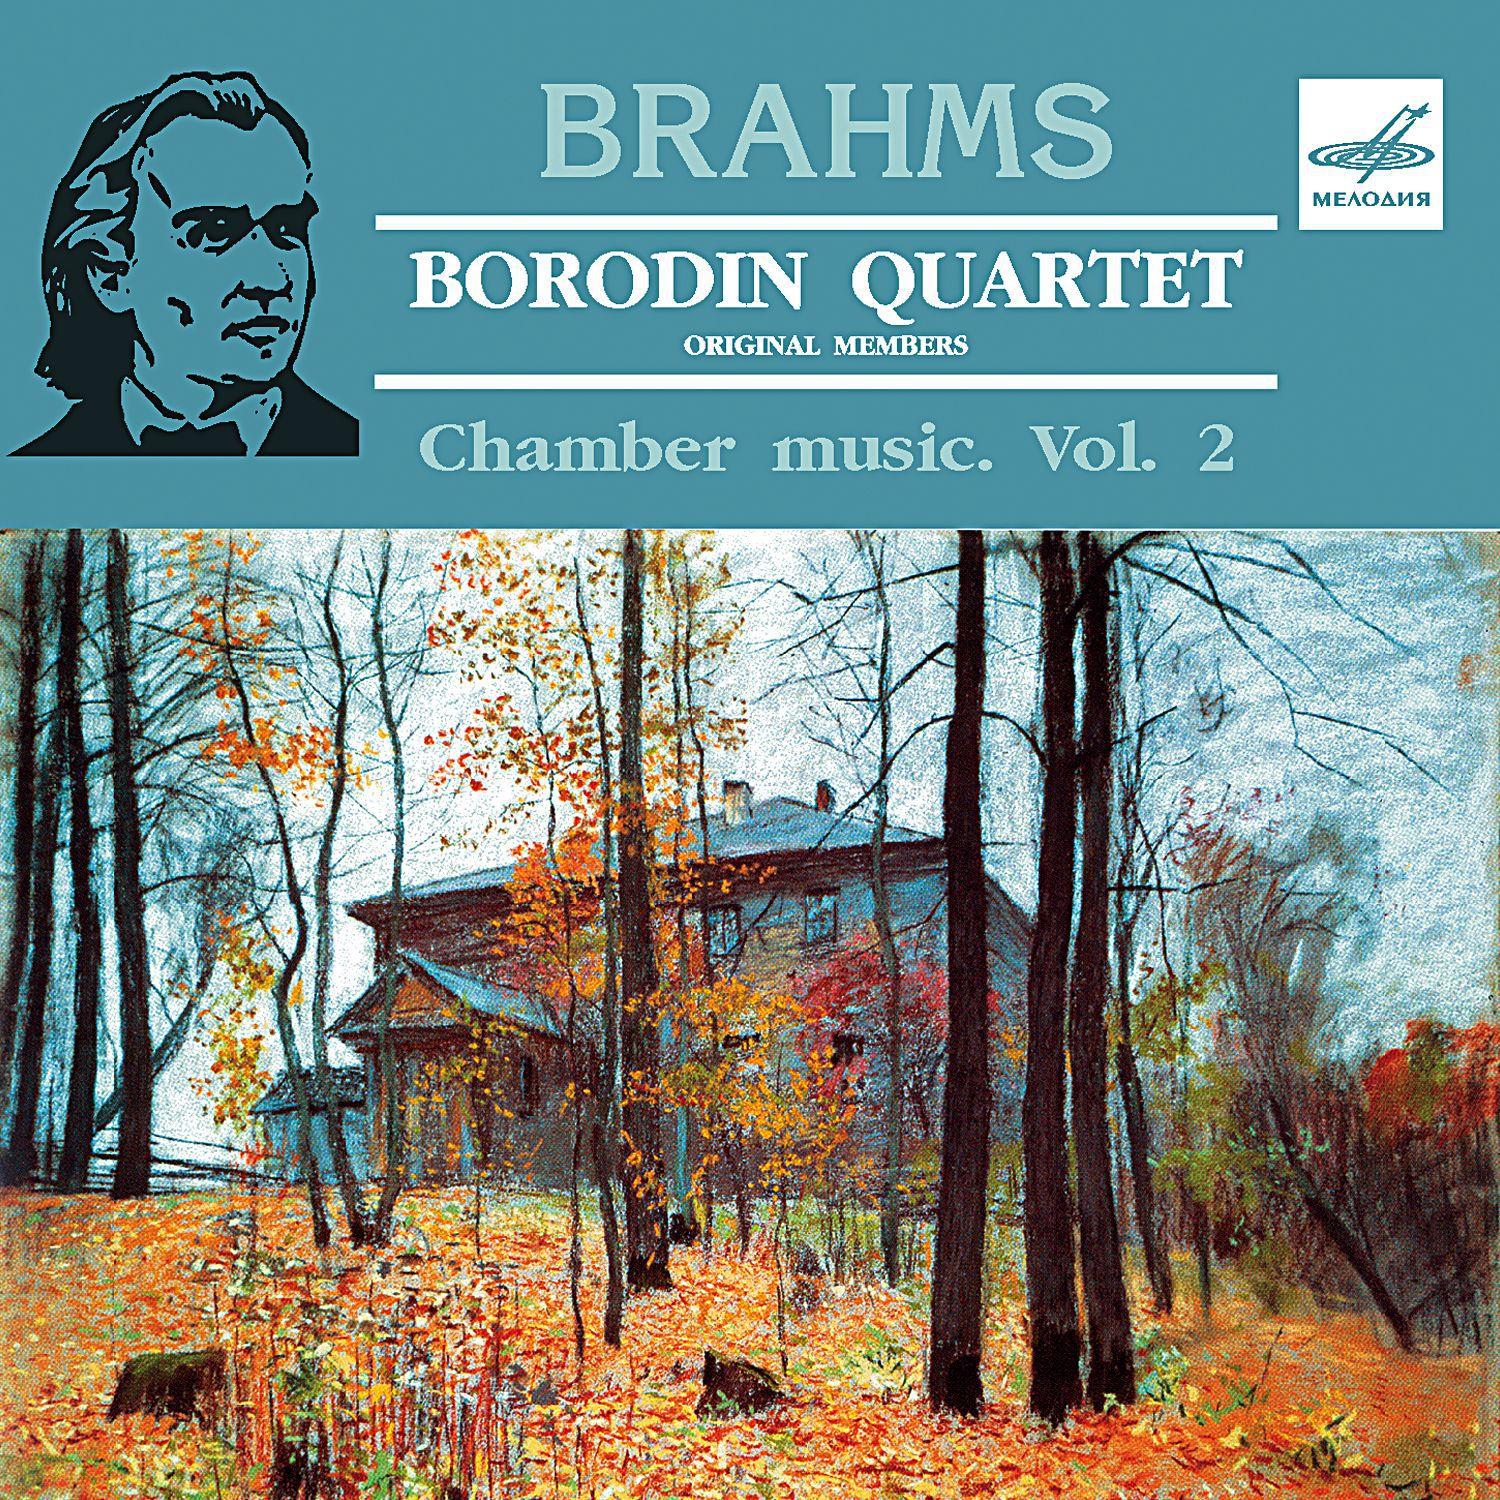 Borodin Quartet Performs Chamber Music, Vol. 2